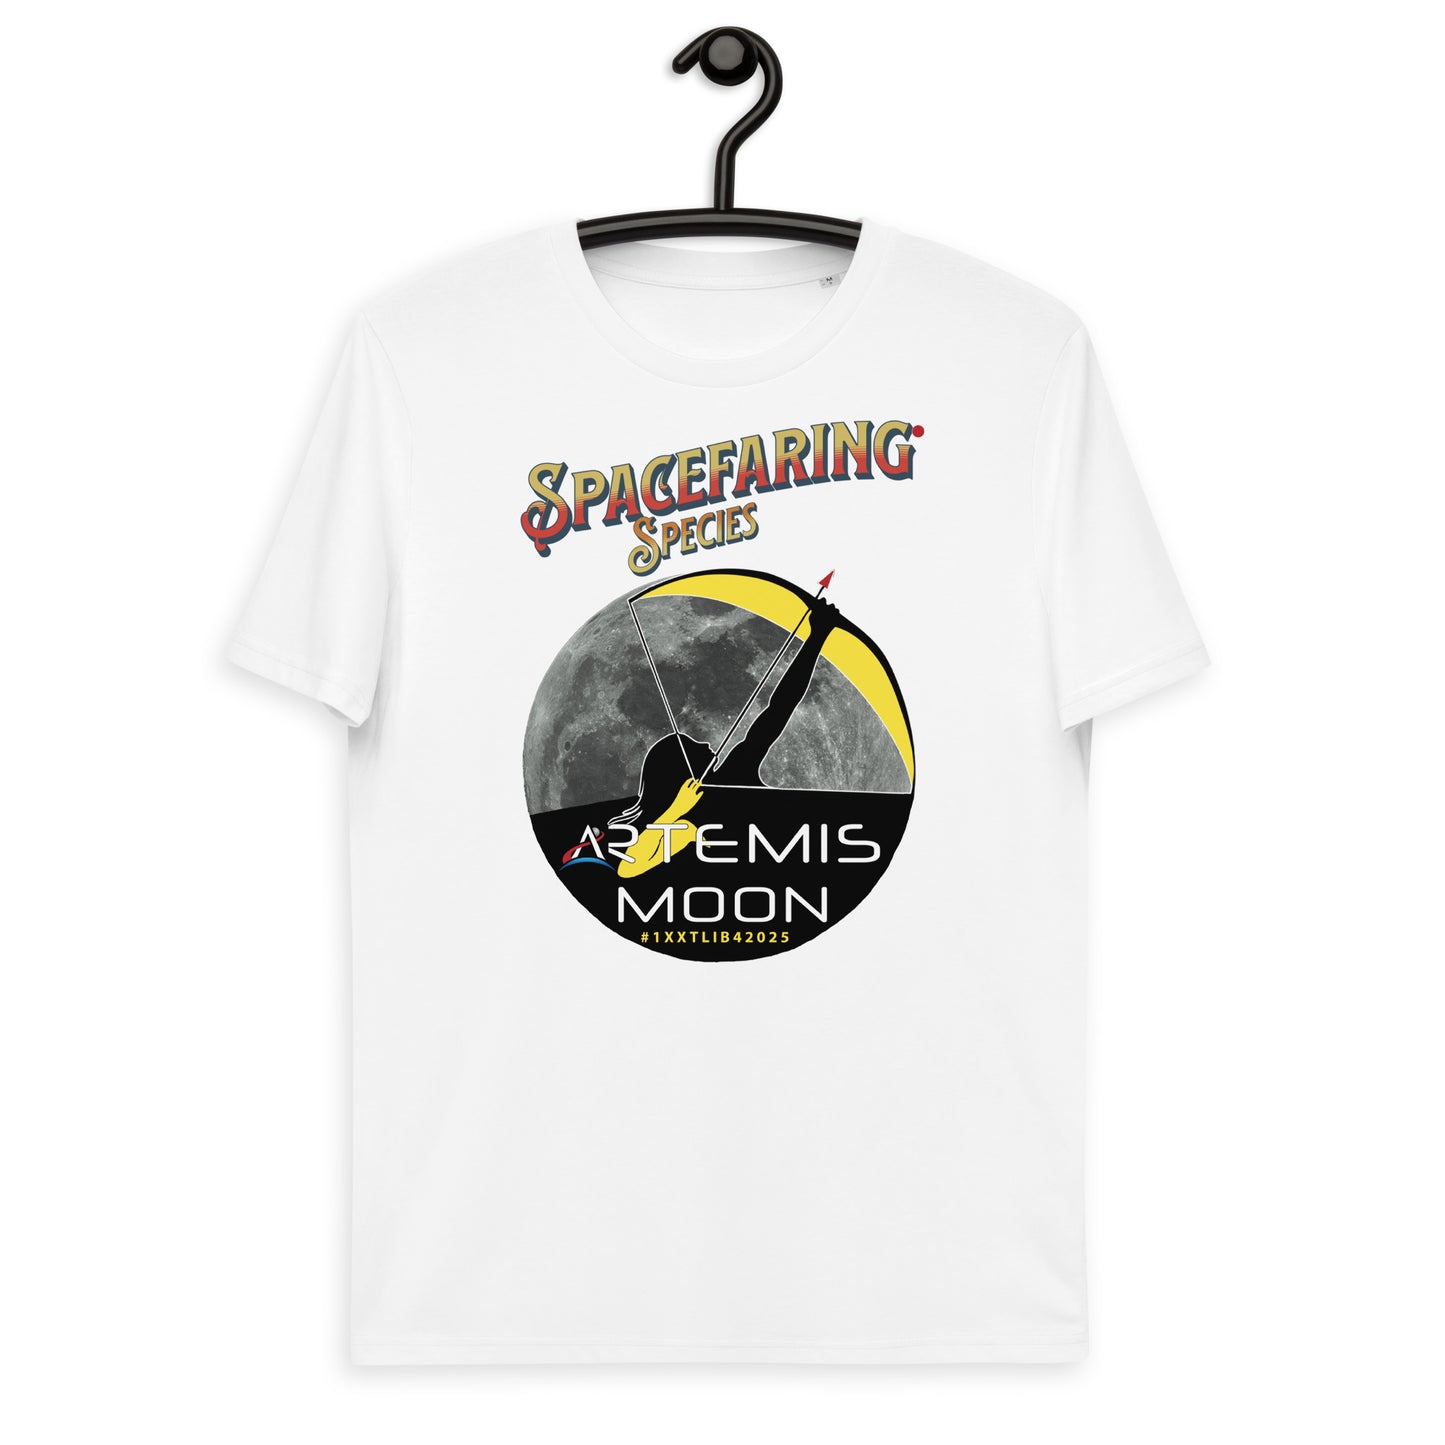 Unisex organic cotton t-shirt - A True Spacefaring Series With #1XXTLIB42025